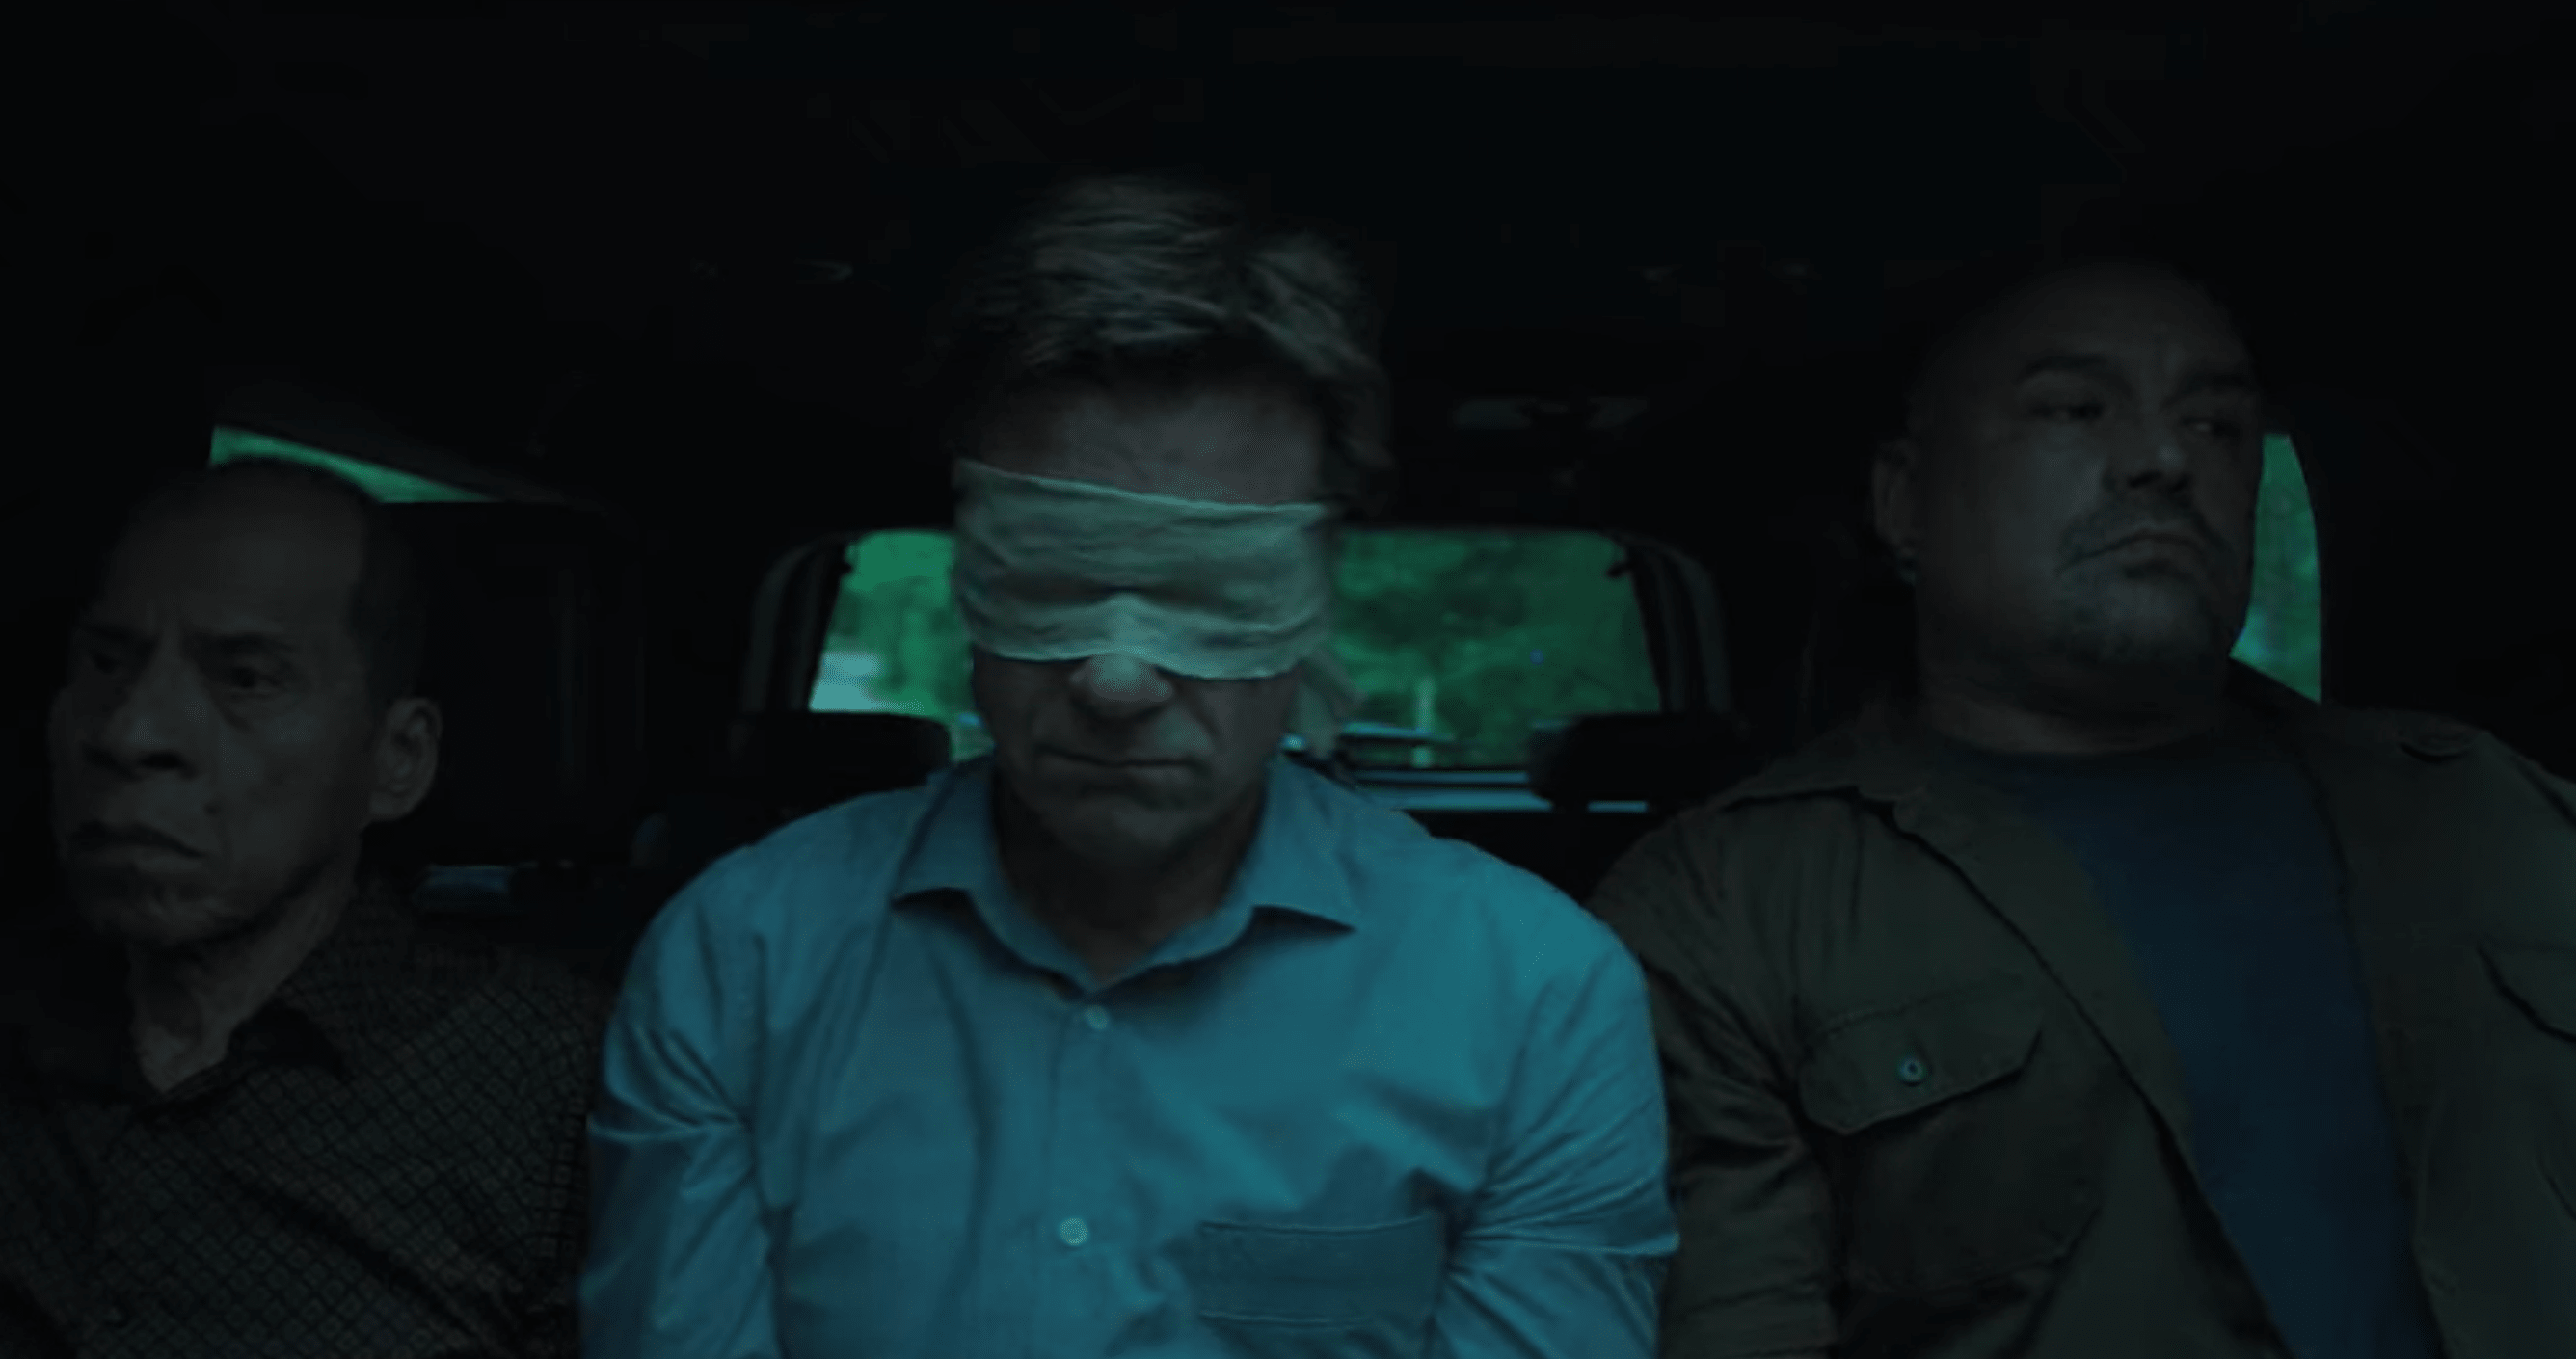 Ozark Season 3 Review: Netflix Crime Drama Is Back & Better Than